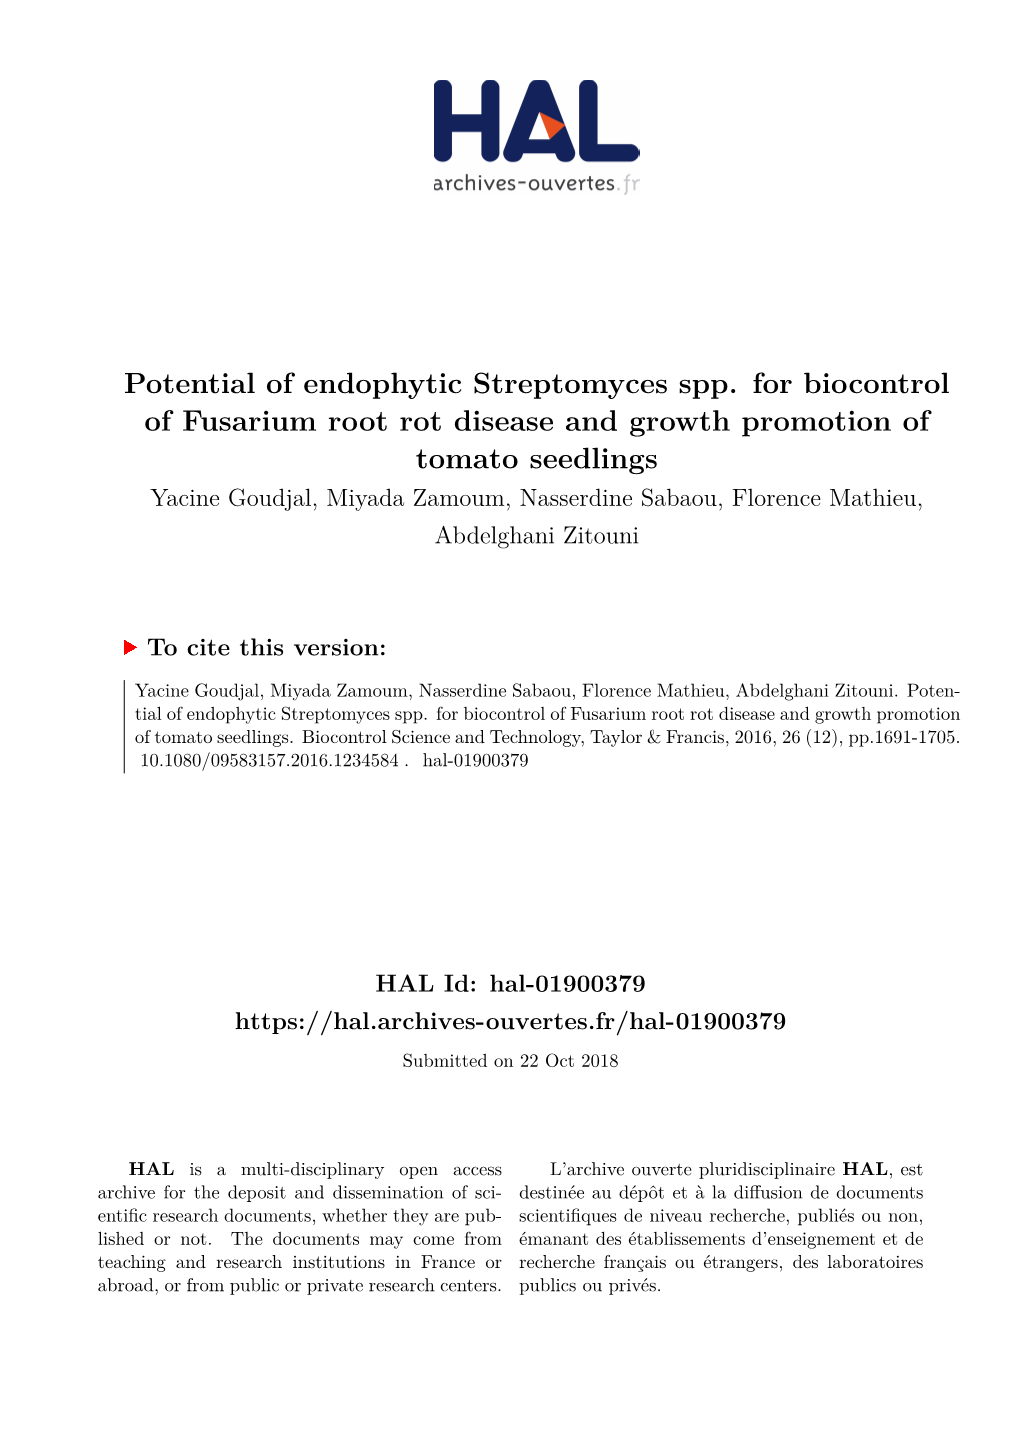 Potential of Endophytic Streptomyces Spp. for Biocontrol of Fusarium Root